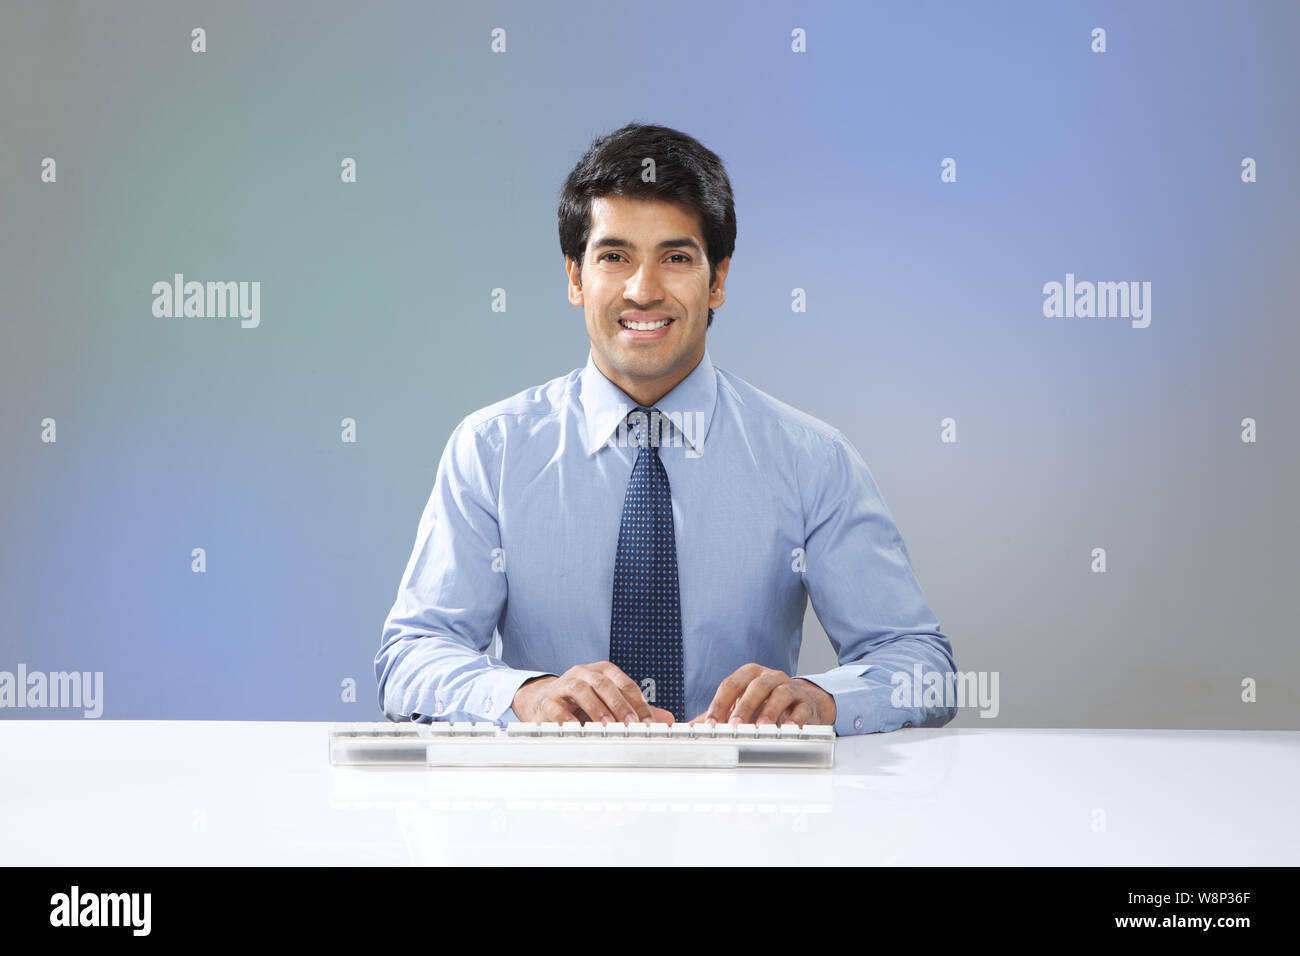 Businessman using wireless keyboard Stock Photo